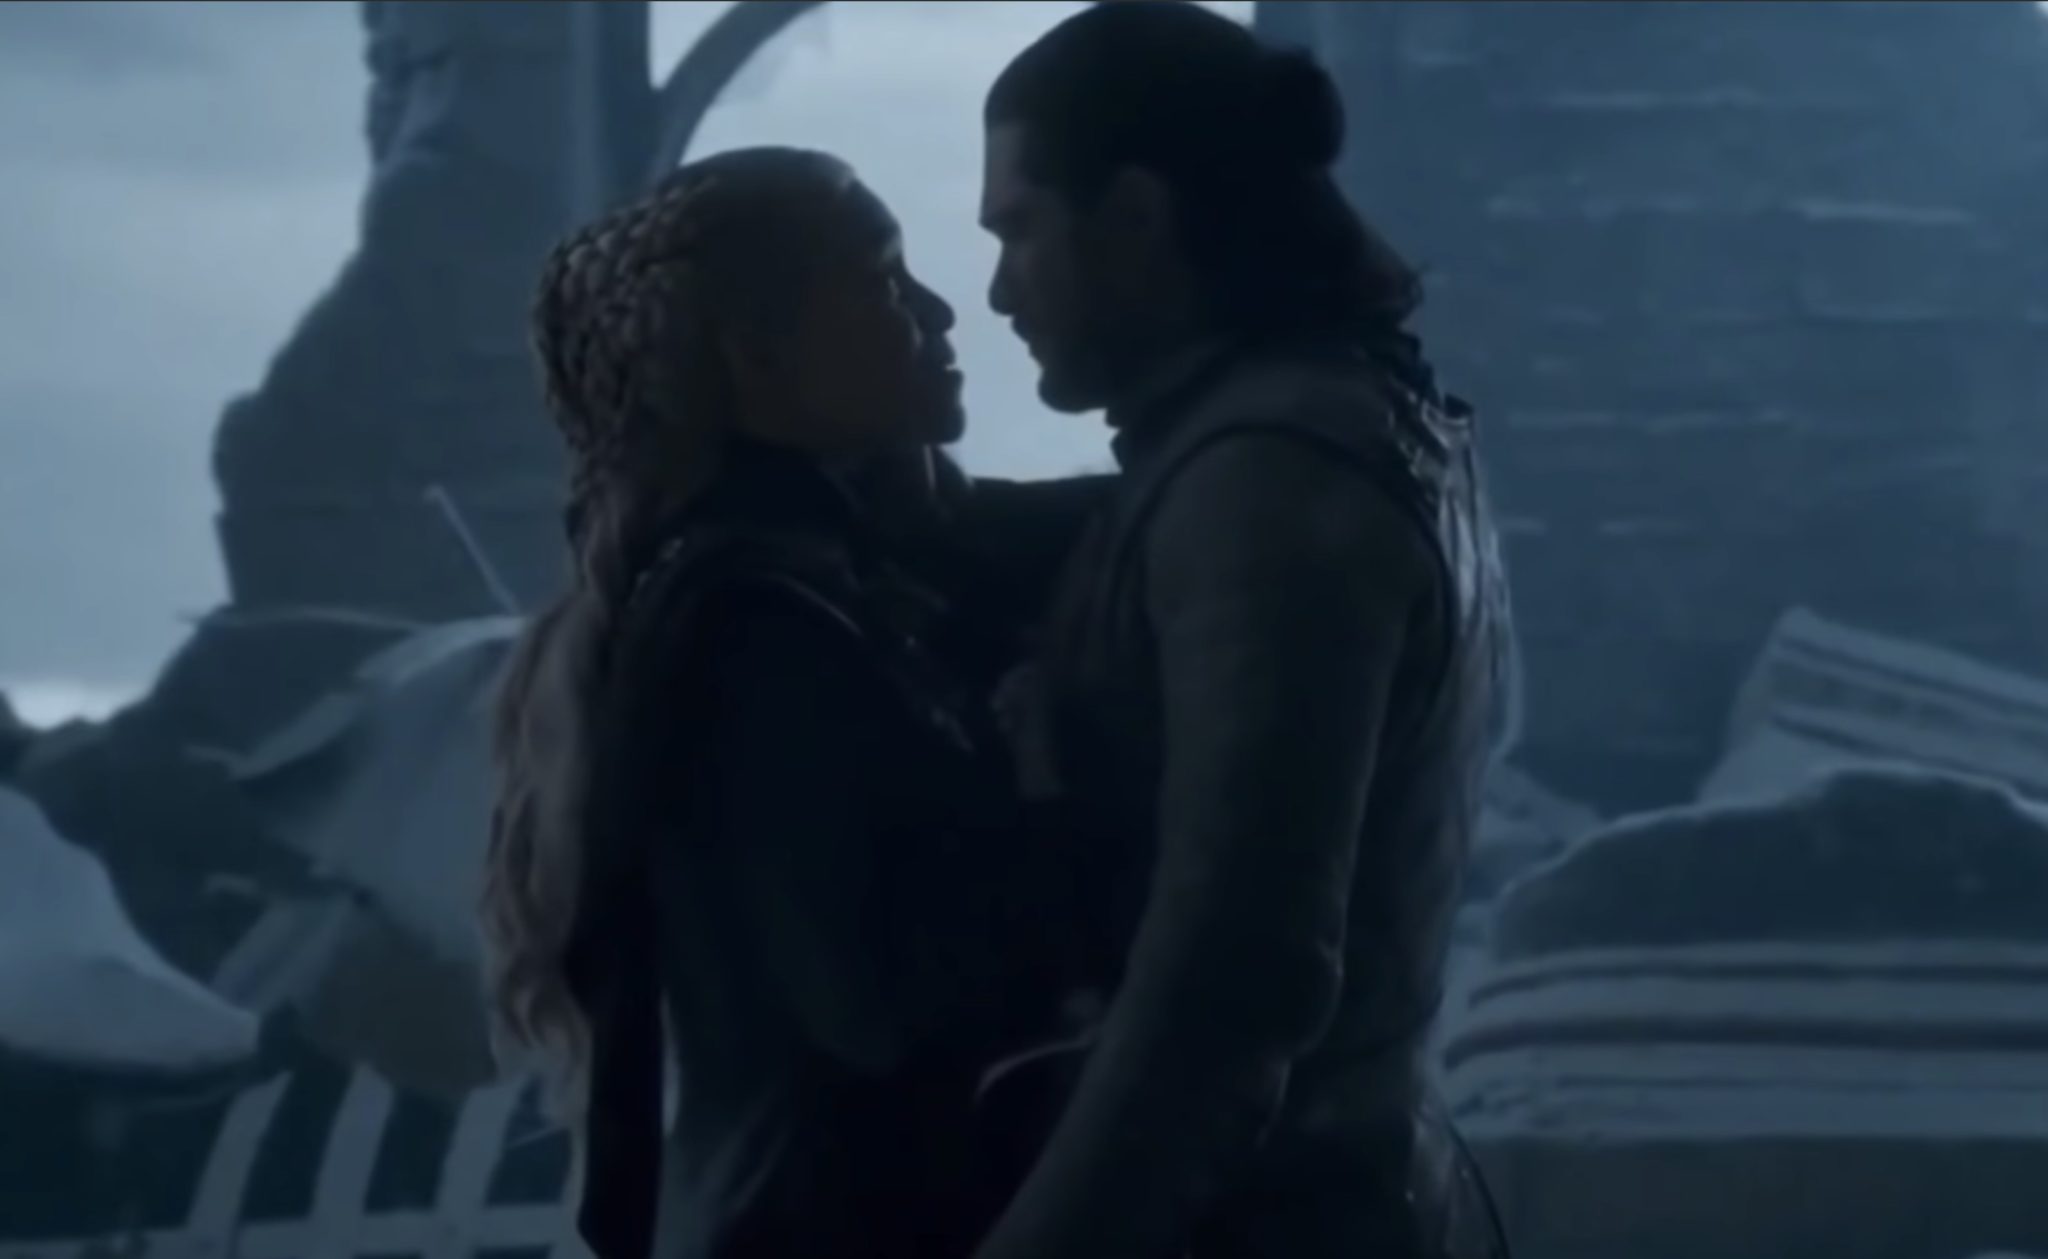 Jon Snow dating Daenerys